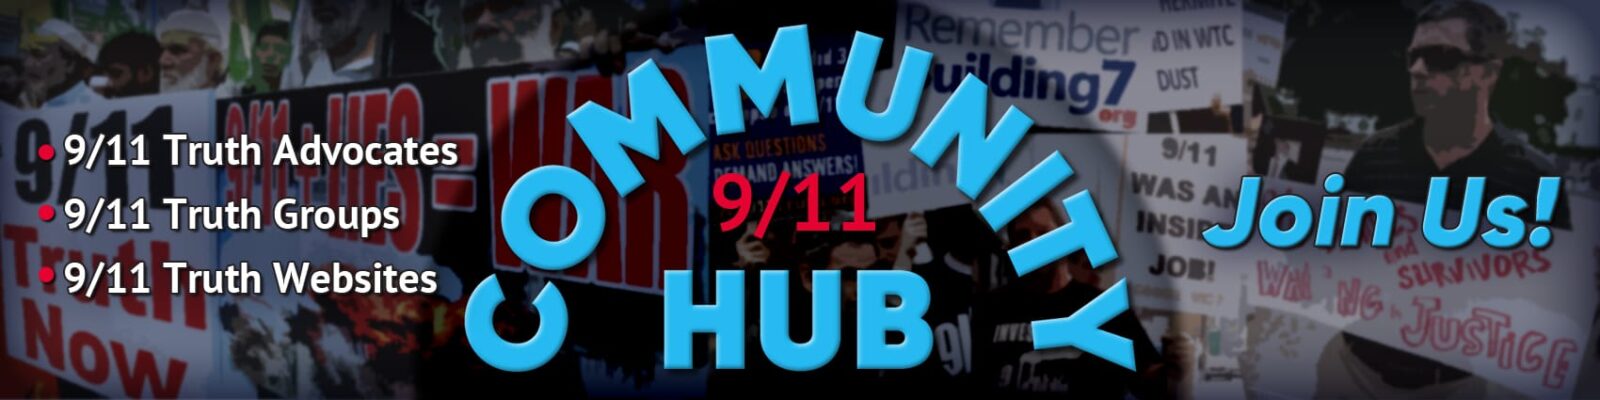 9/11 Community Hub